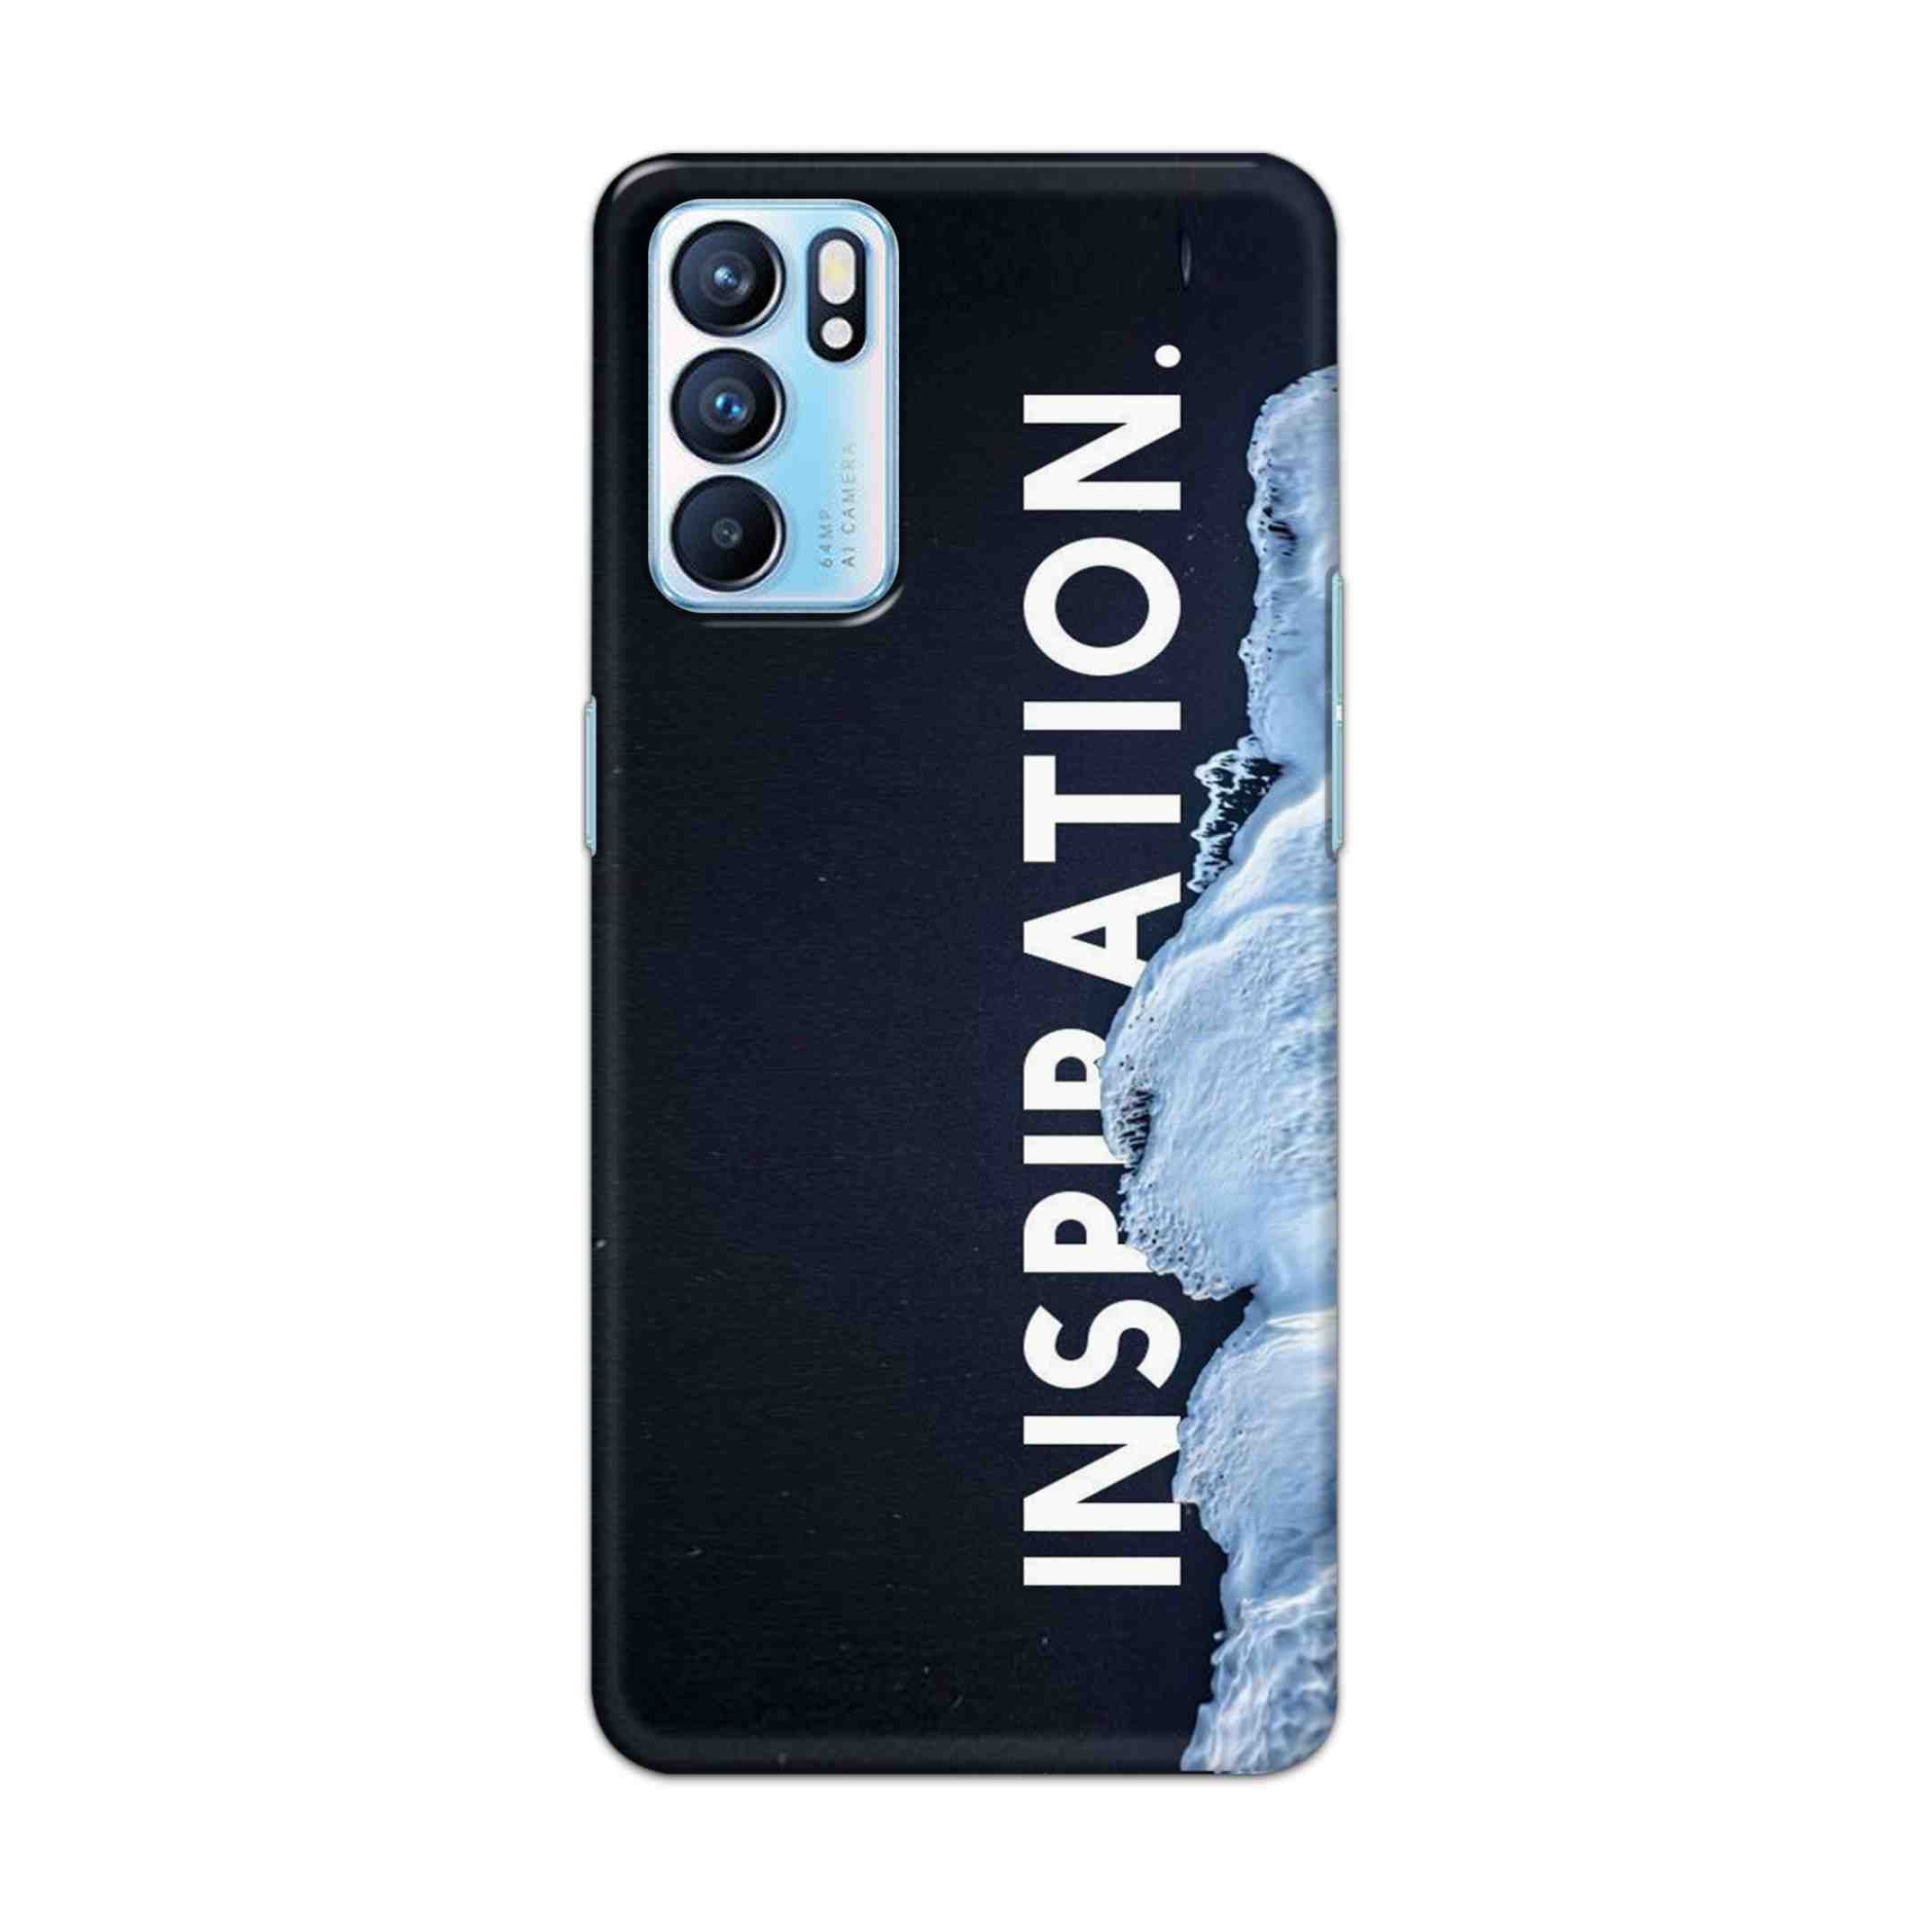 Buy Inspiration Hard Back Mobile Phone Case Cover For OPPO RENO 6 5G Online